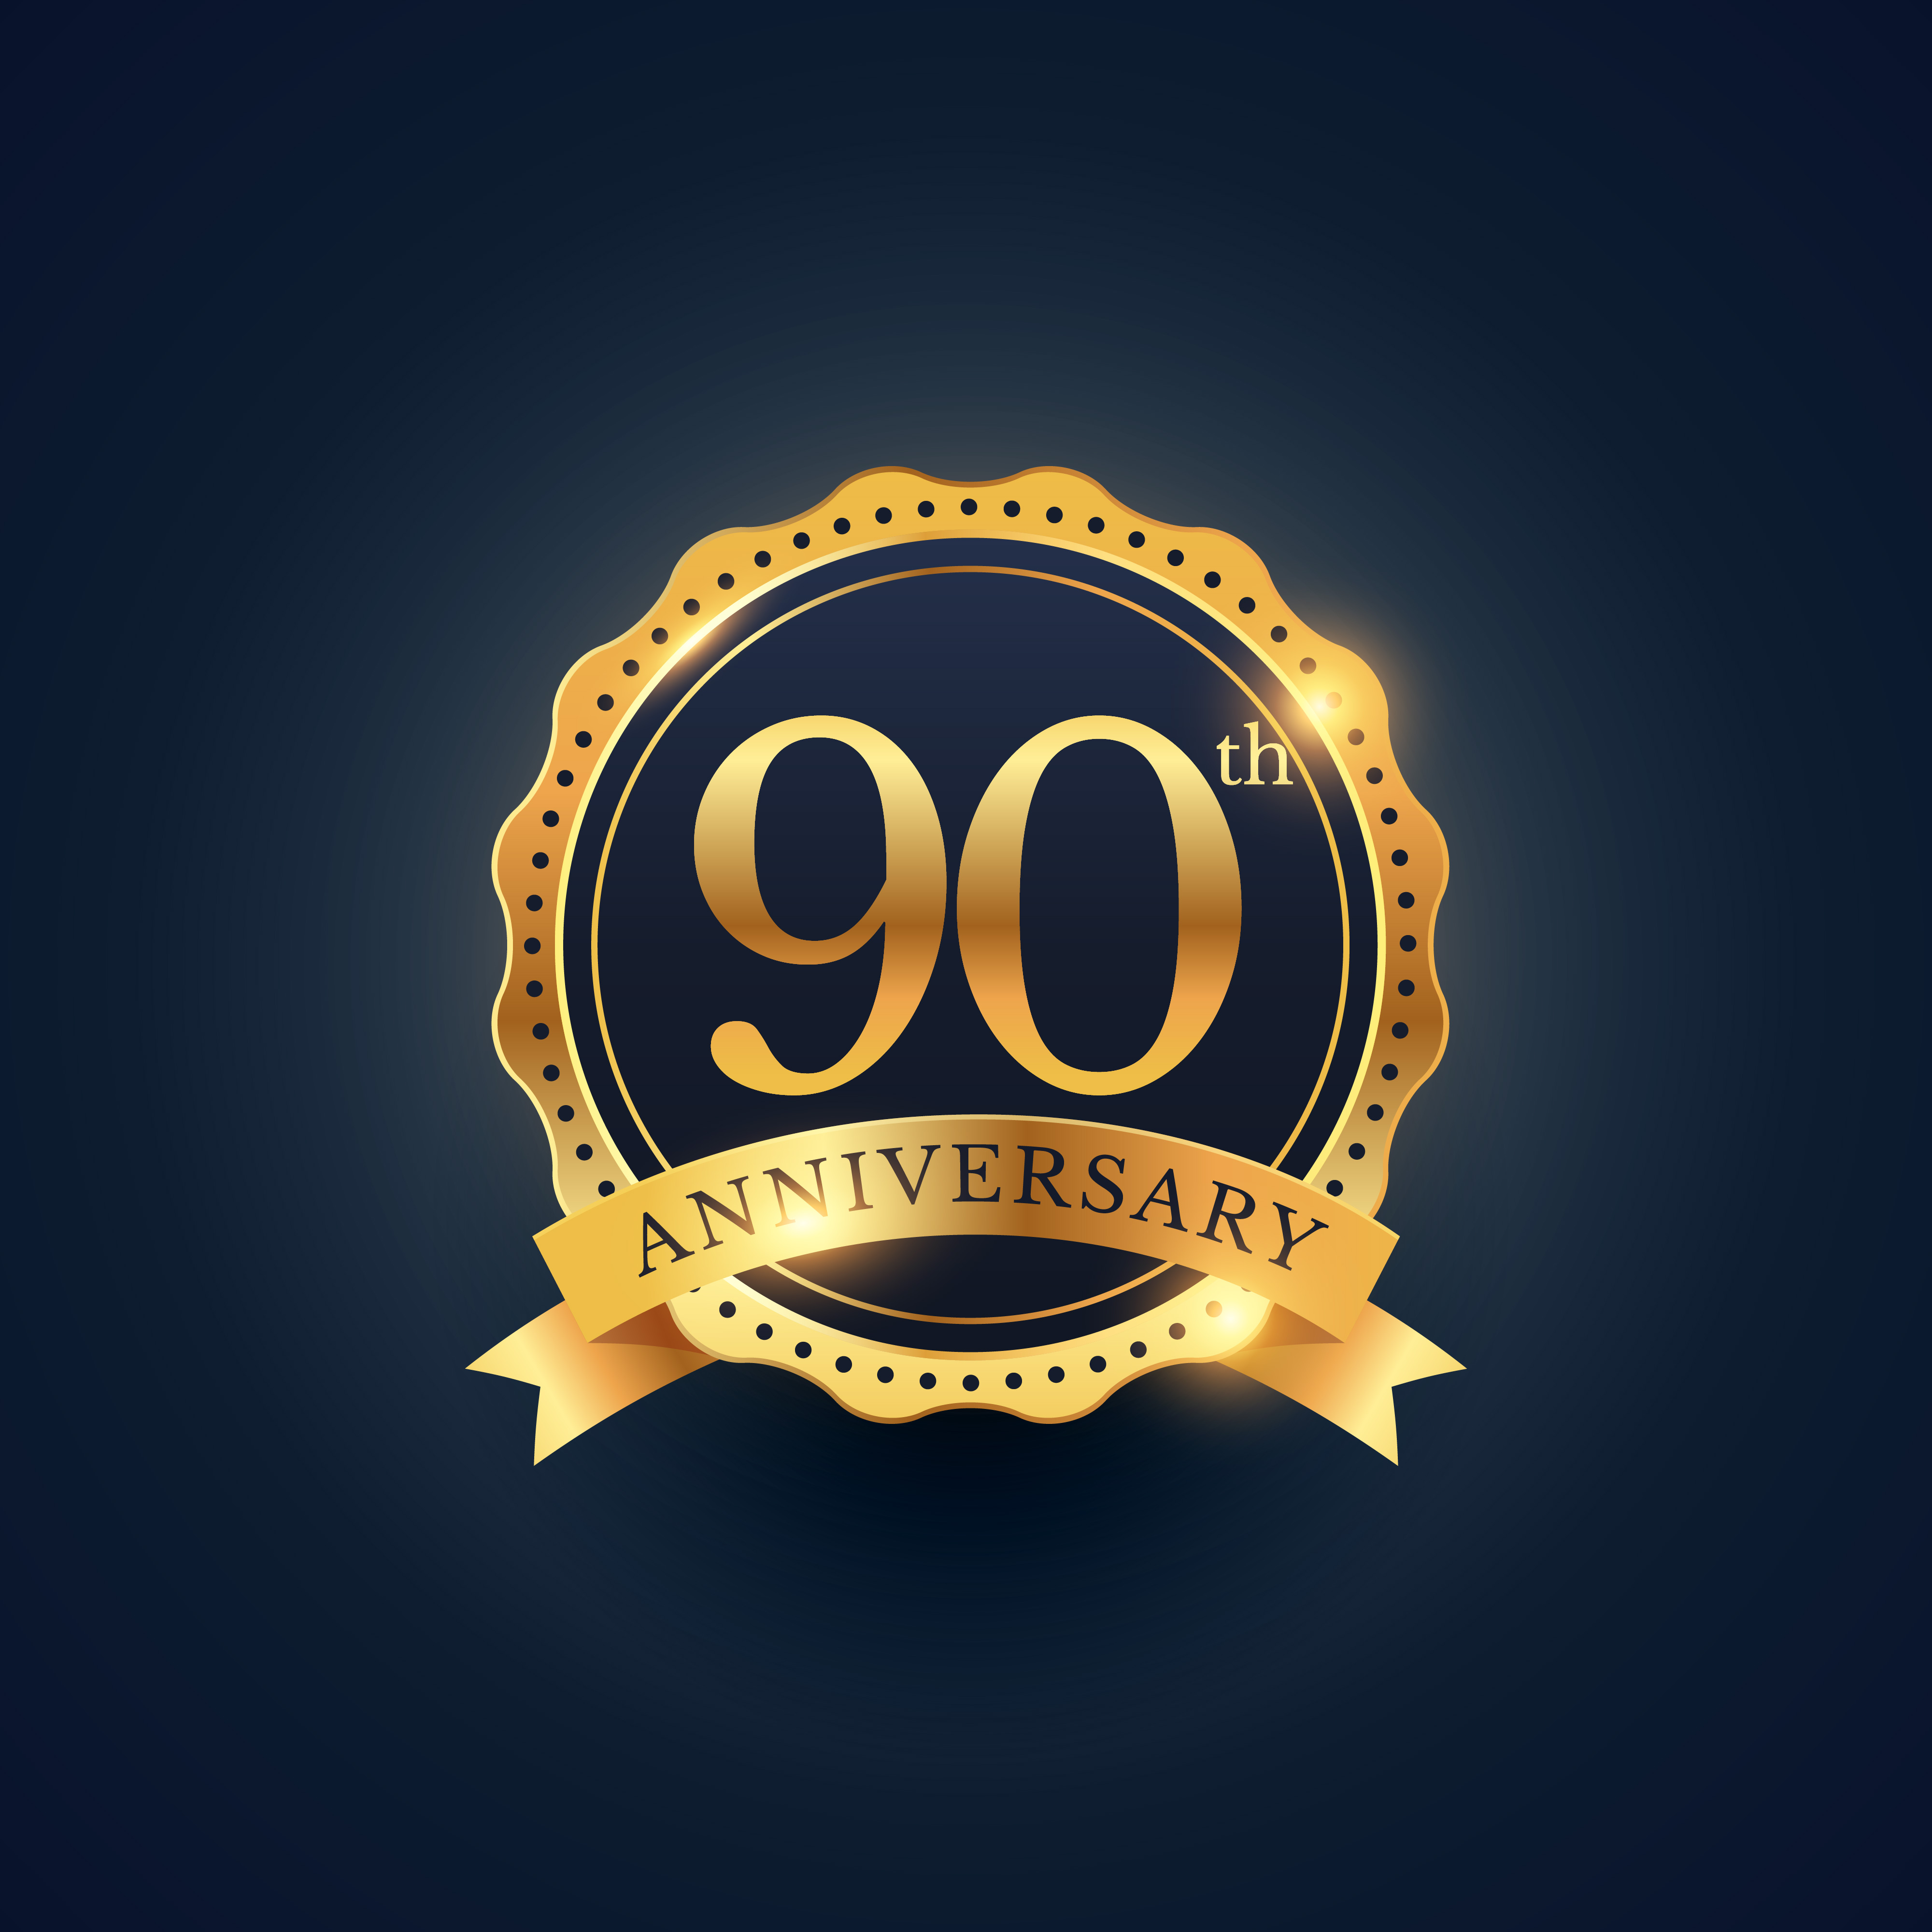 90th-anniversary-celebration-badge-label-in-golden-color-download